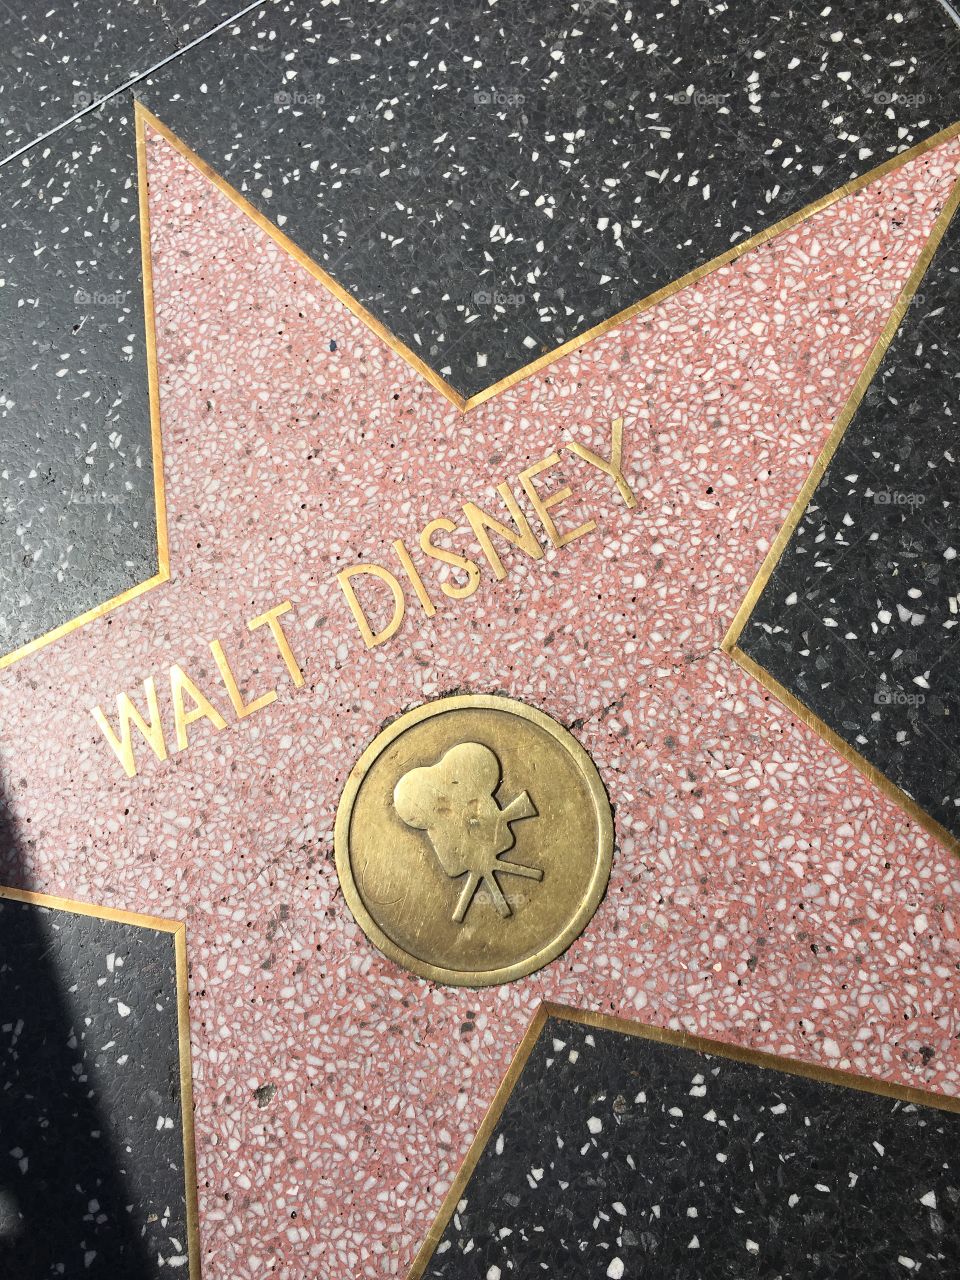 Walt the legend